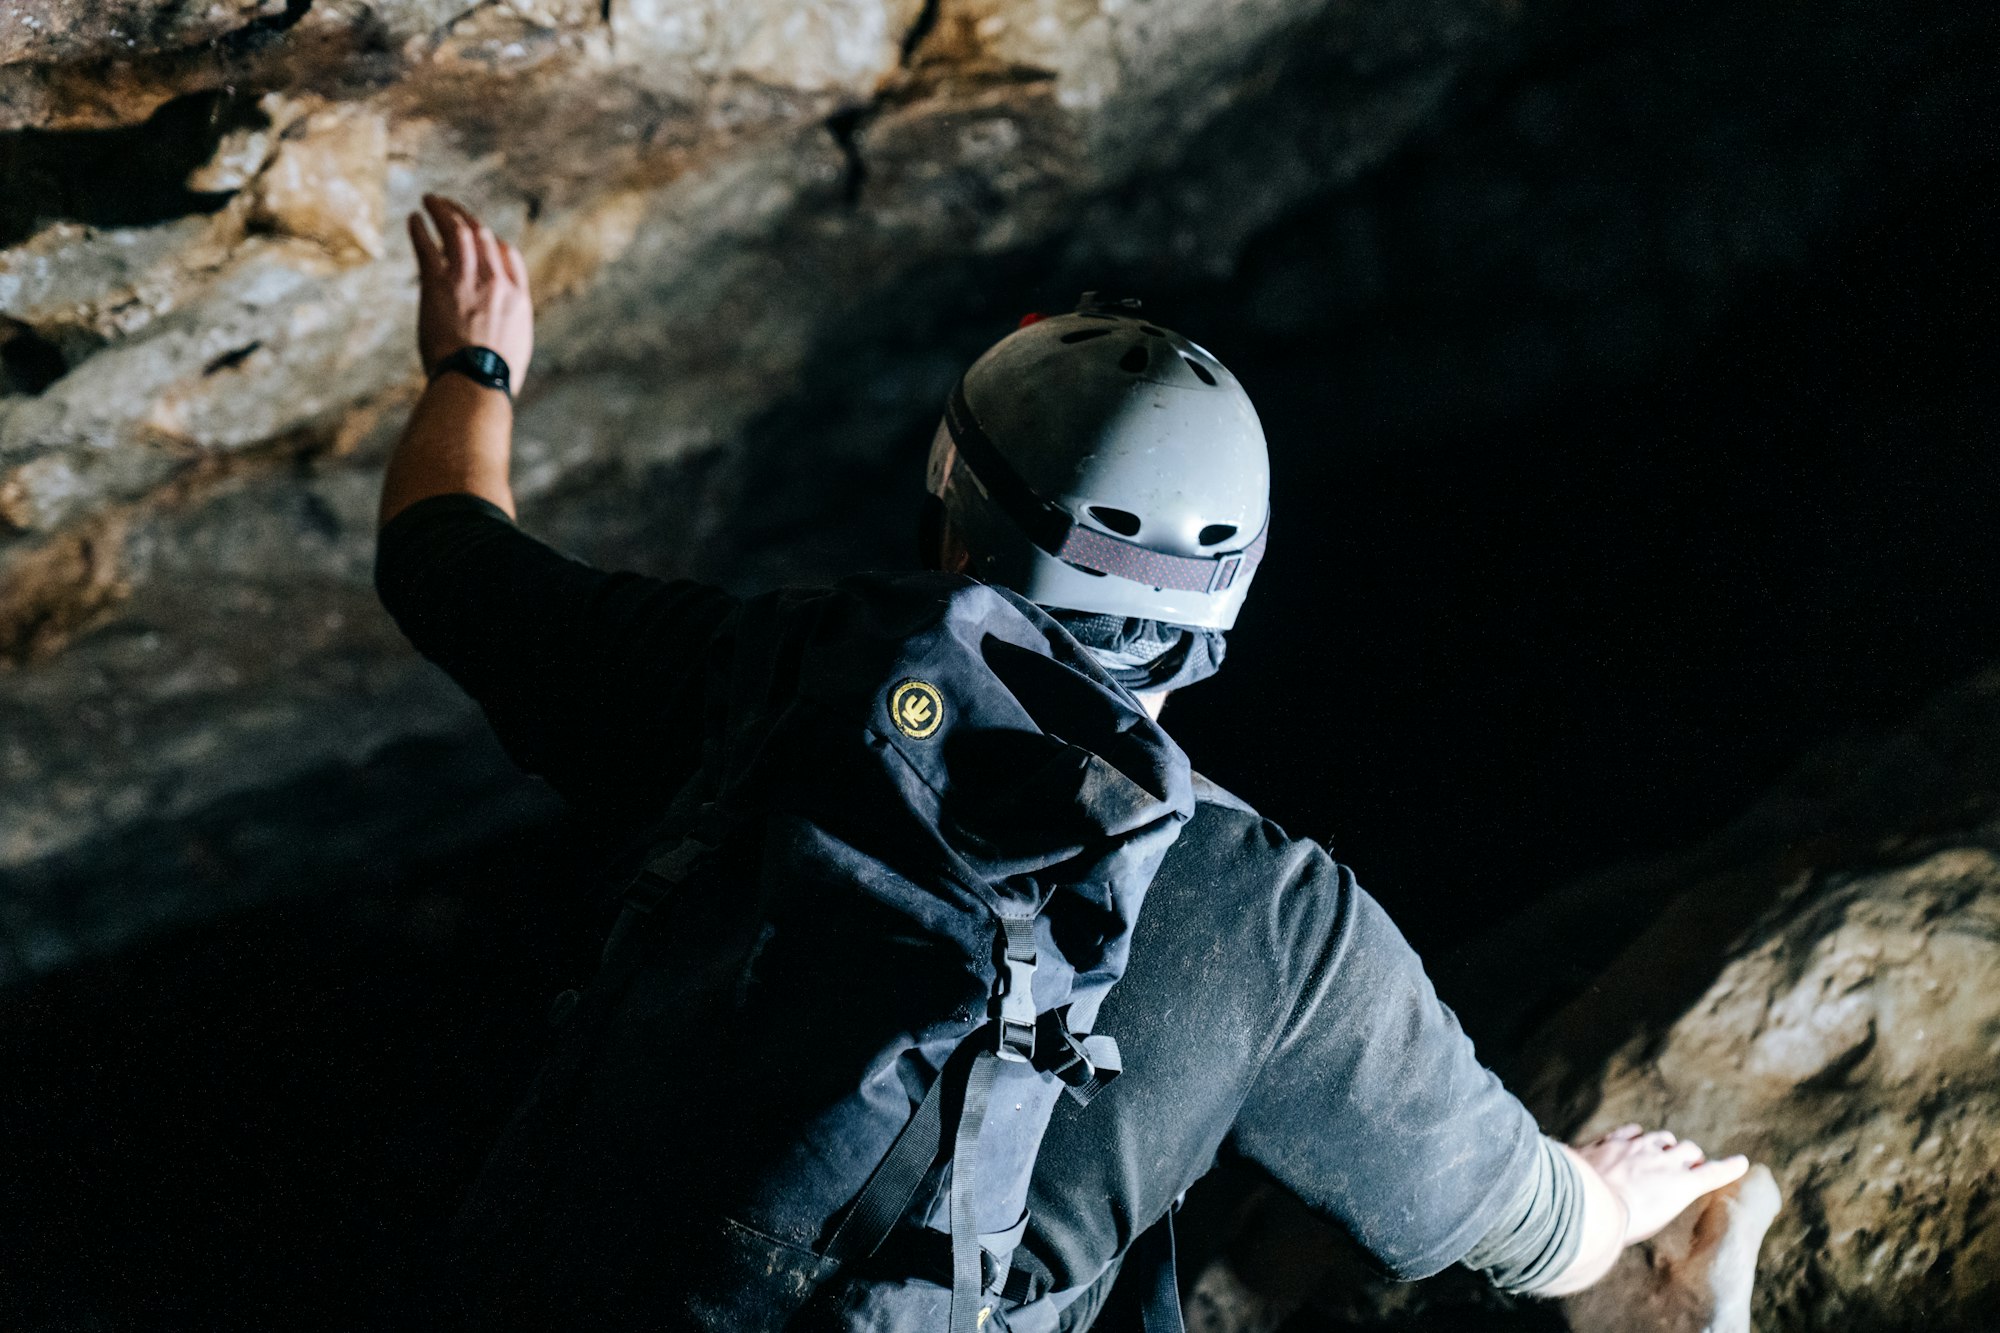 Man wearing helmet and backpack exploring cave